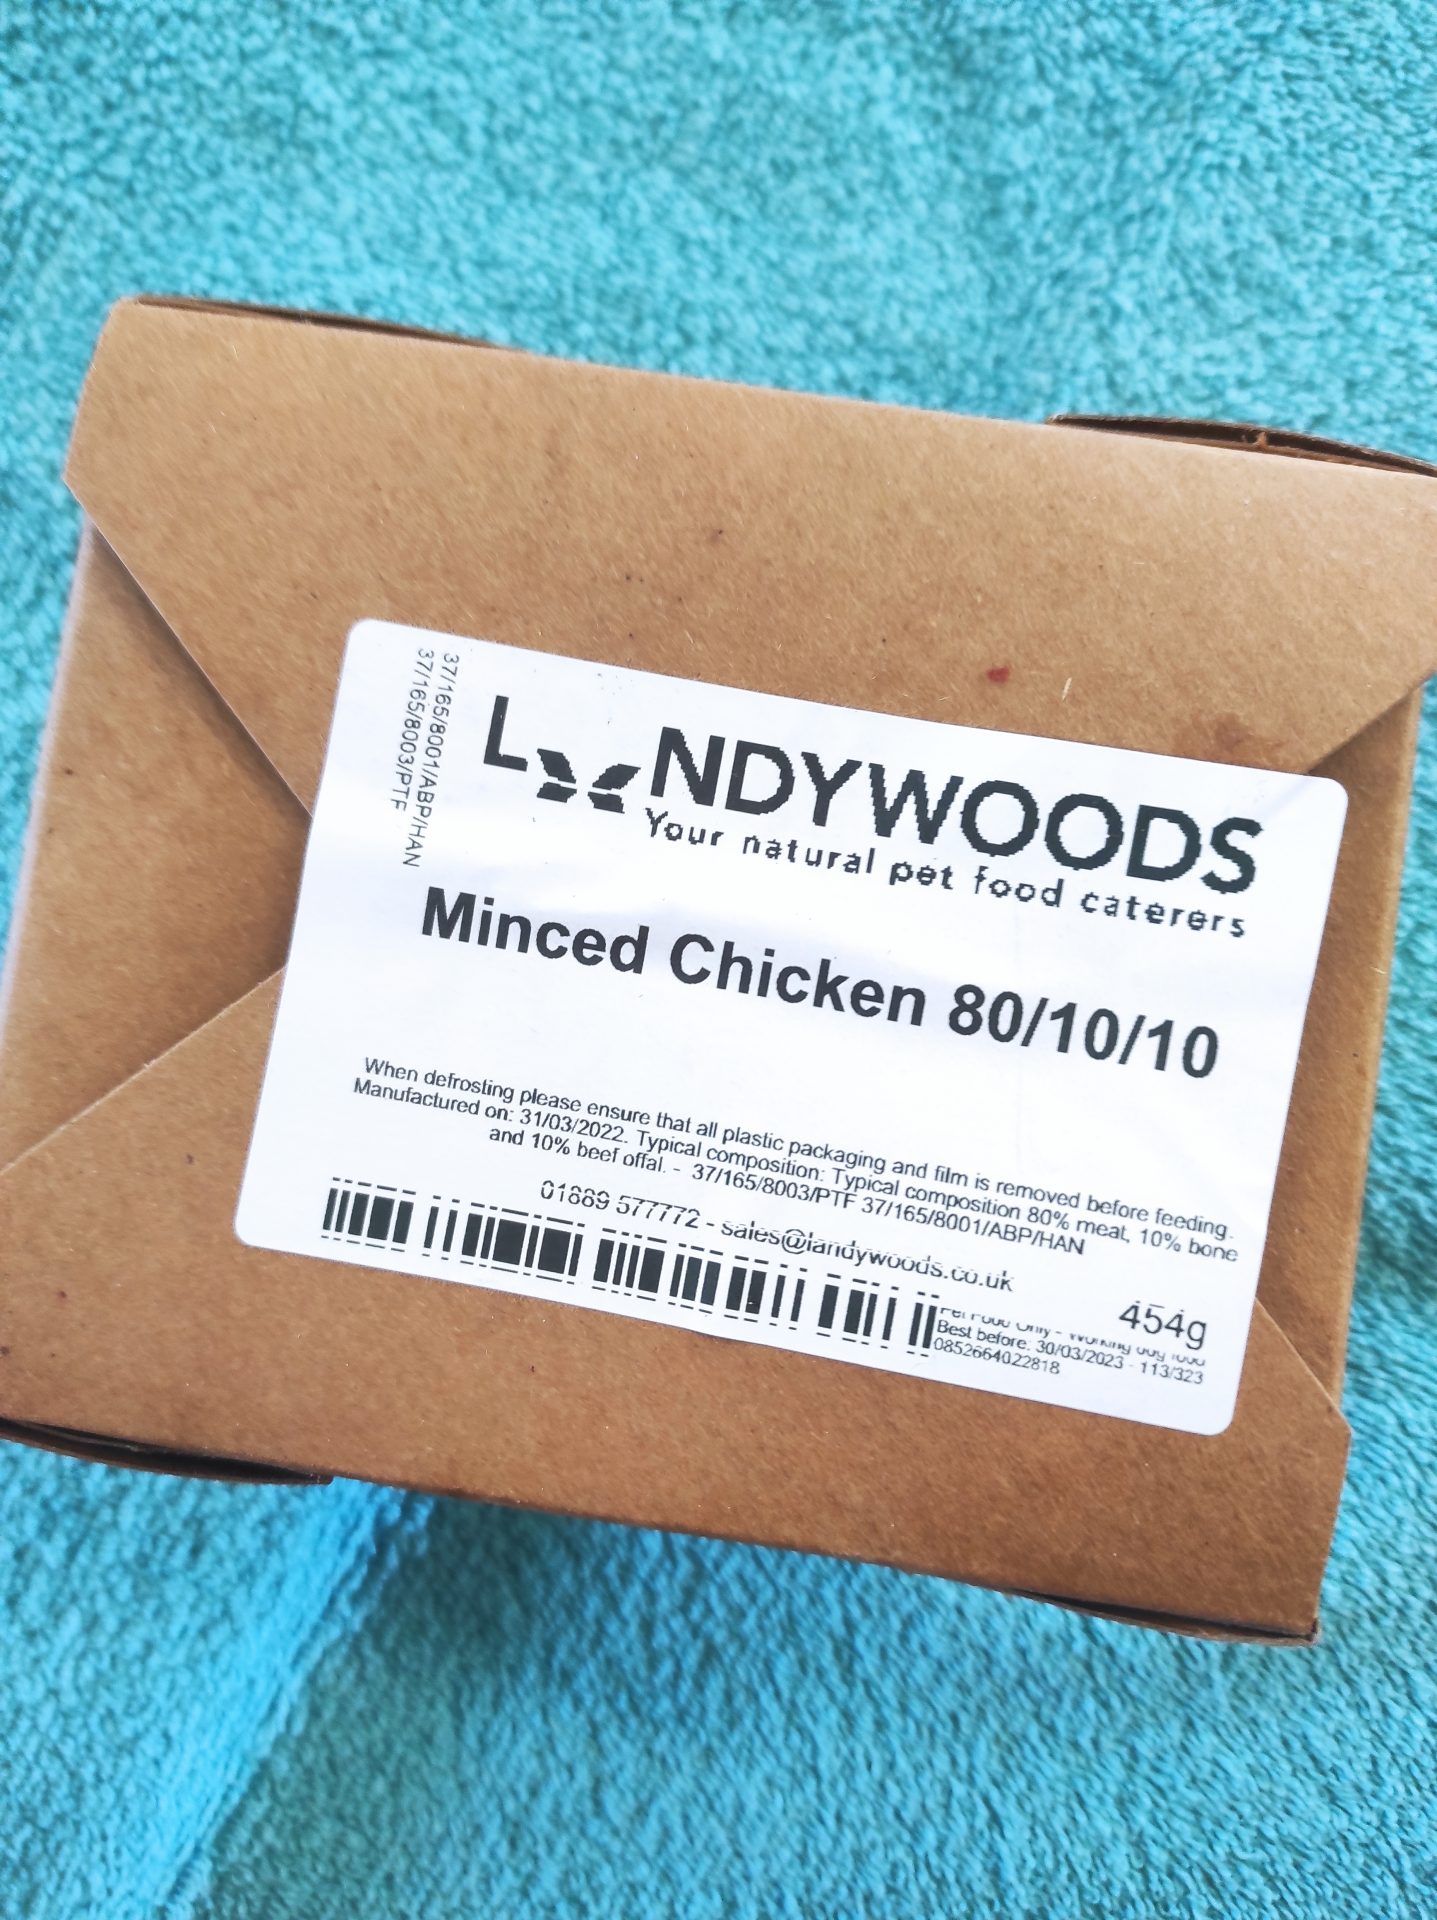 Minced Chicken image